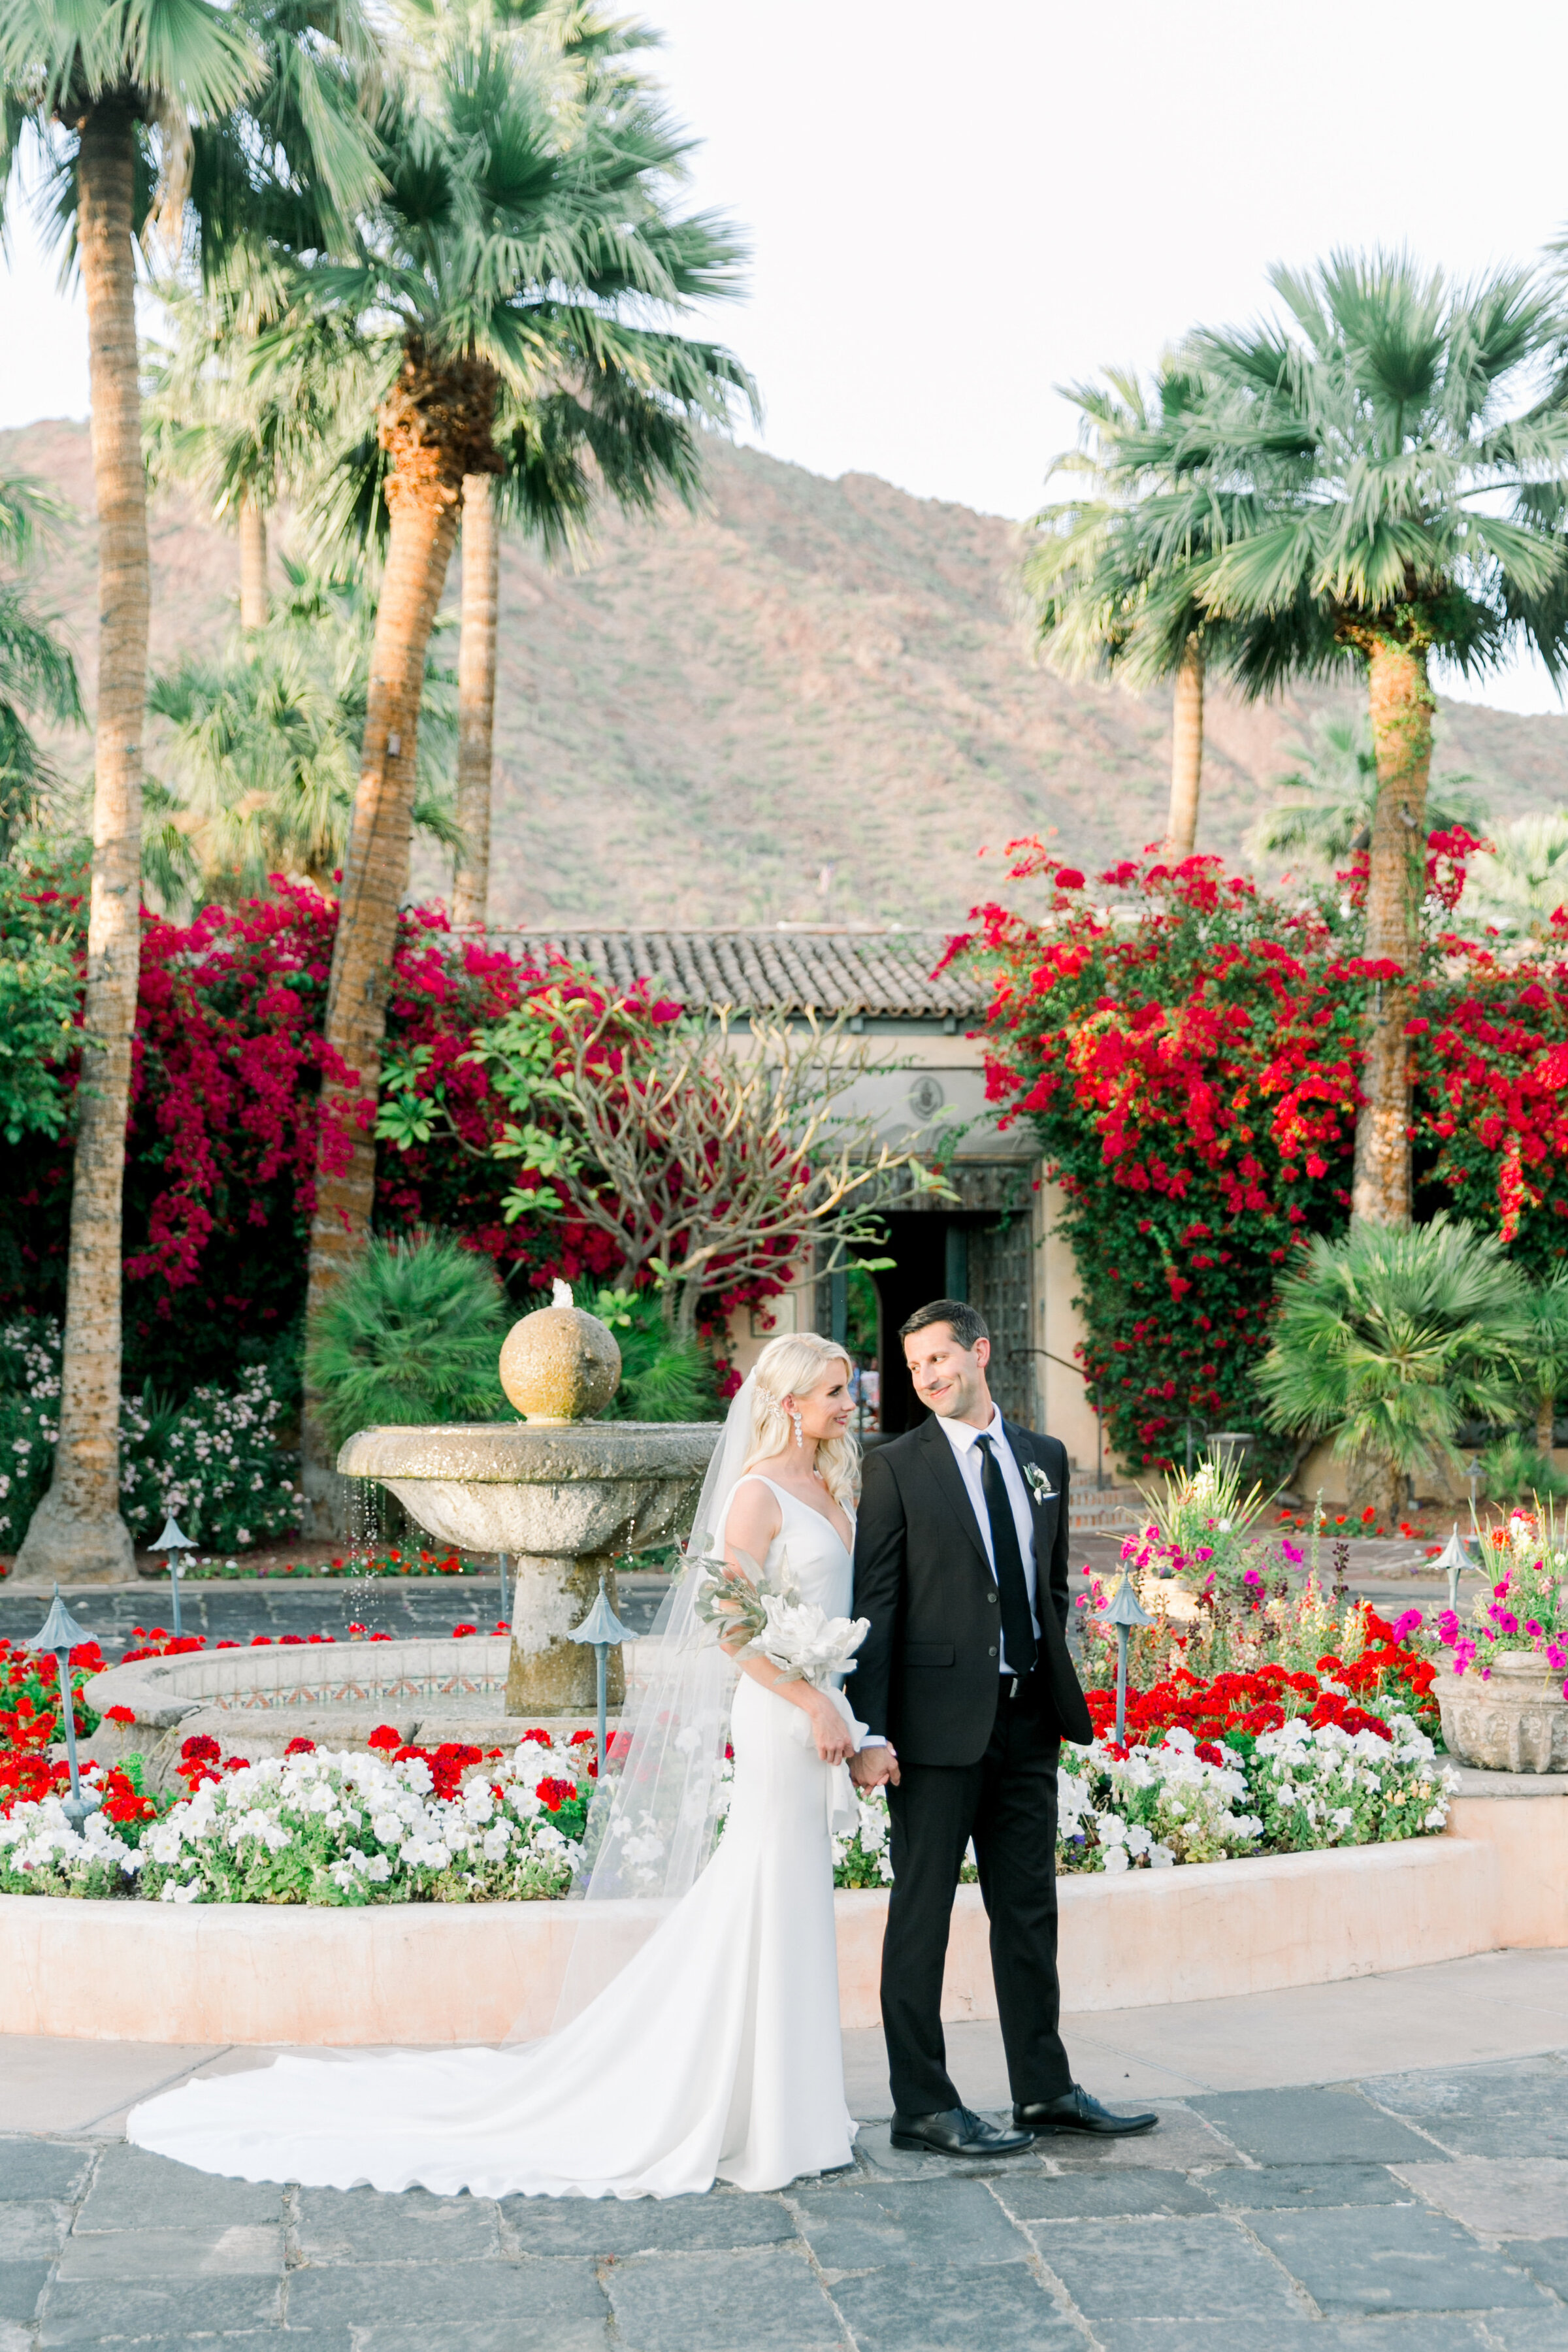 Karlie Colleen Photography - Arizona Wedding - Royal Palms Resort- Alex & Alex-160